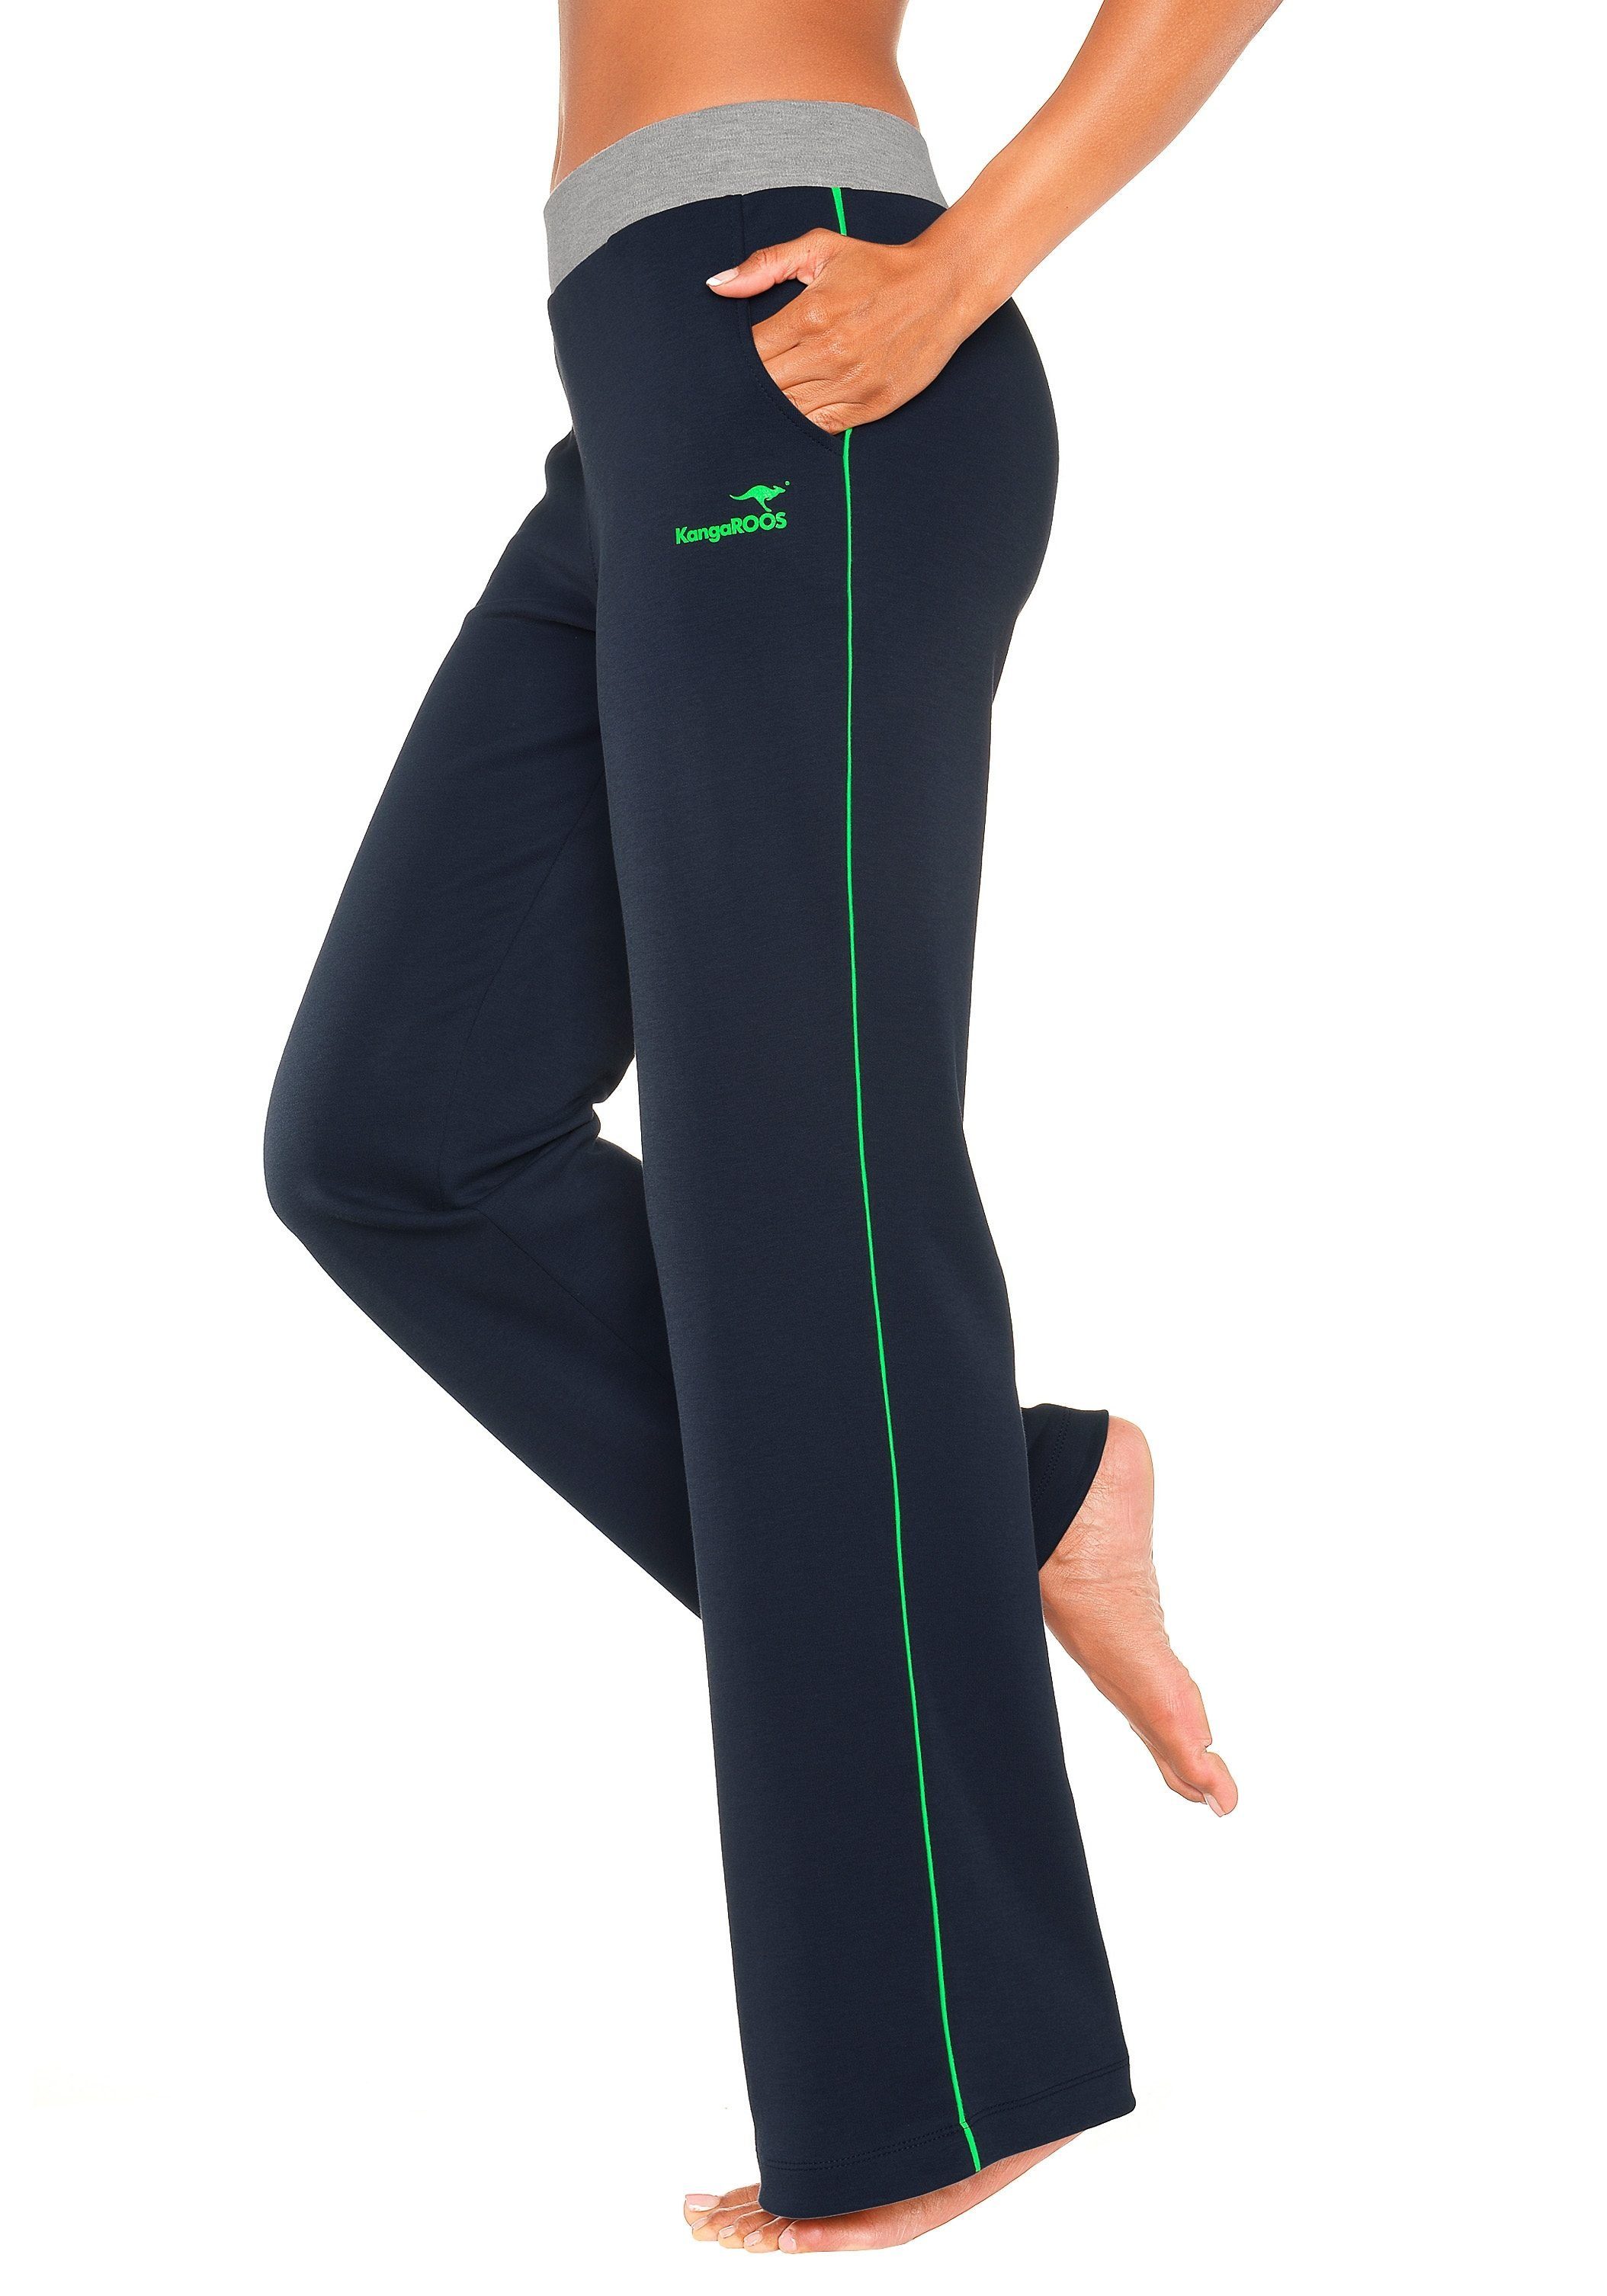 KangaROOS Relaxhose mit Loungeanzug marine-grün-grün Bund, breitem Loungewear